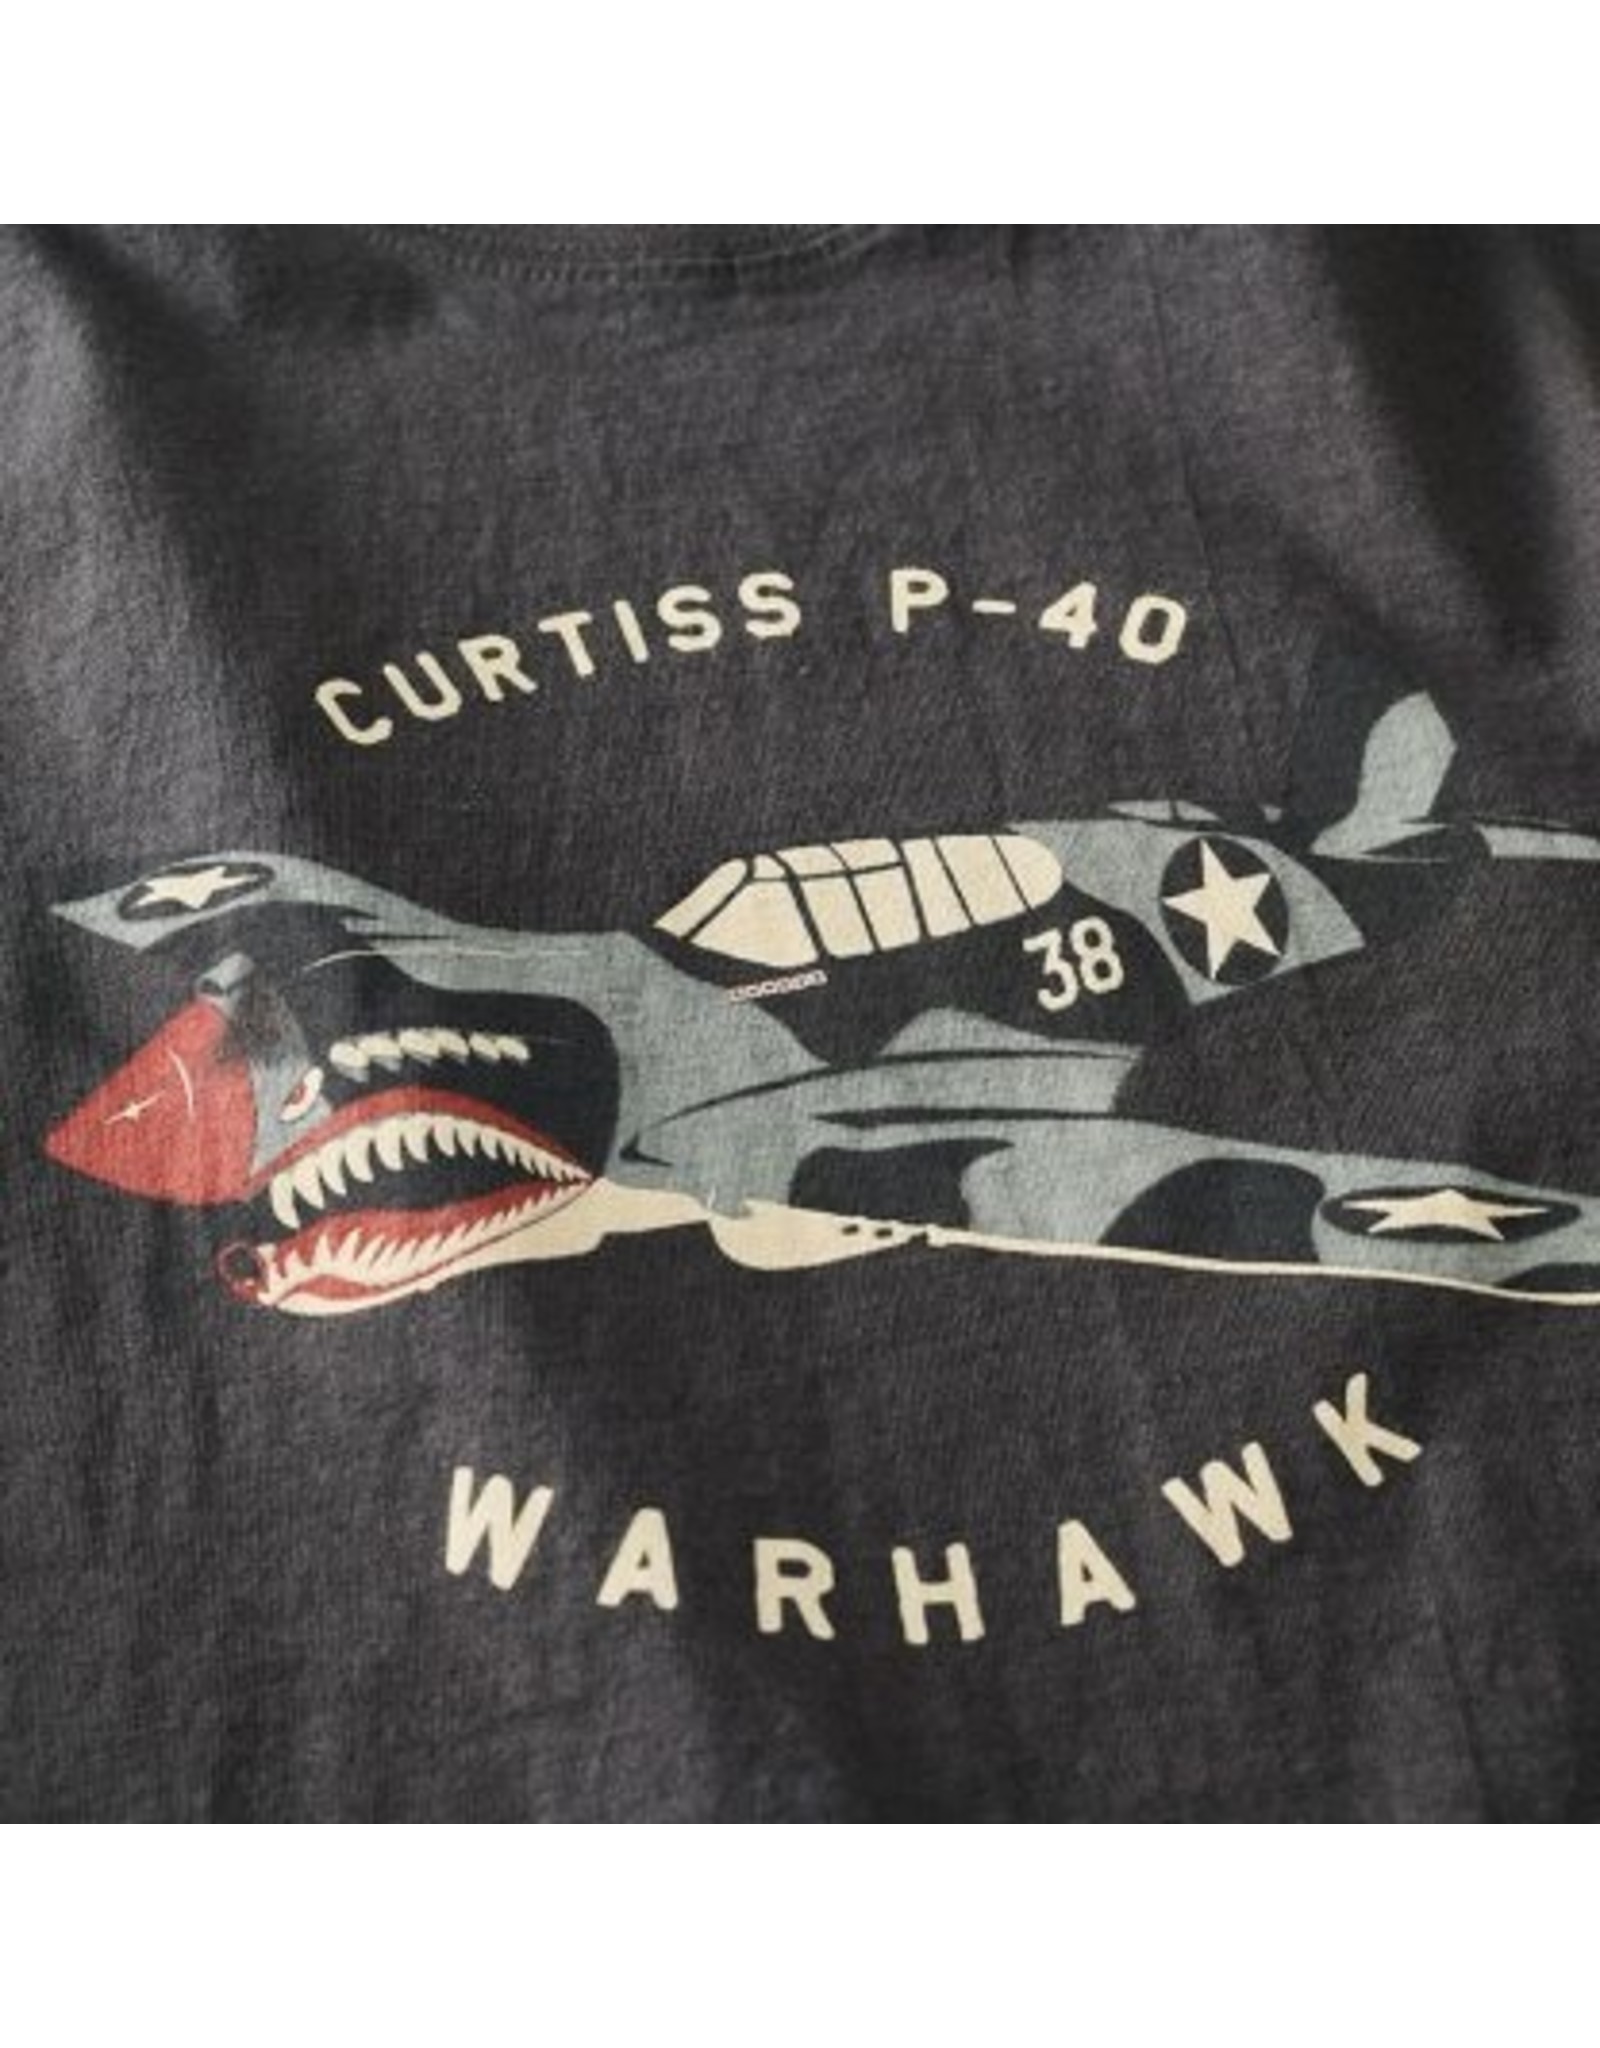 RED CANOE CURTISS P-40 WARHAWK SHIRT